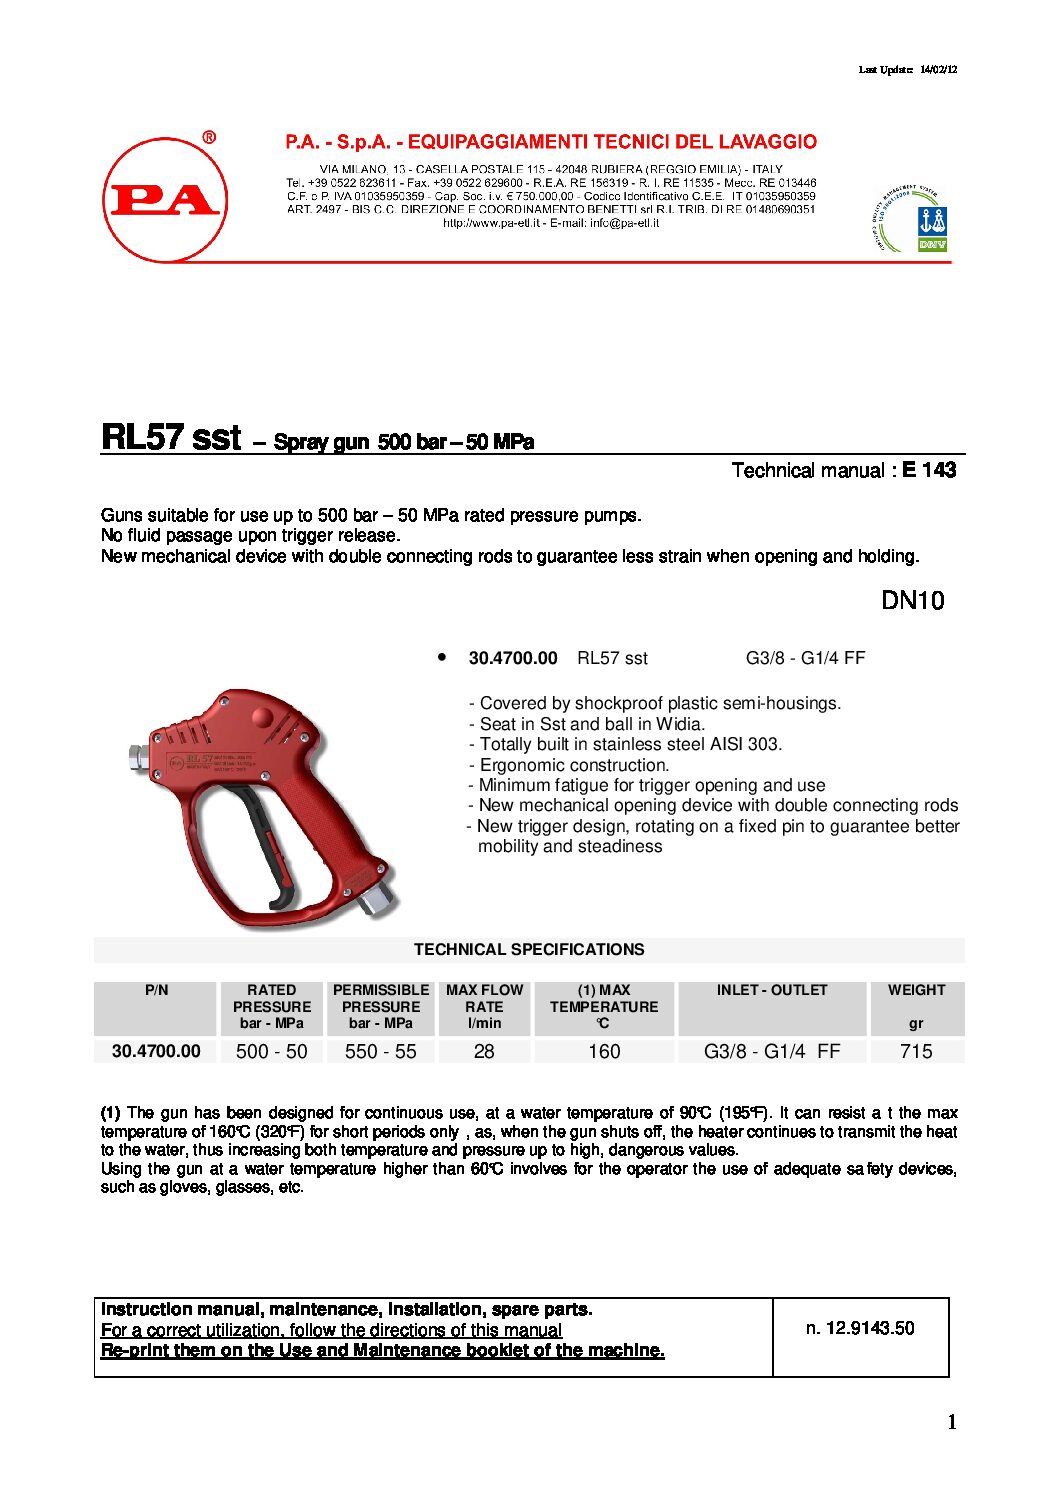 PA RL57 Stainless Steel spray gun technical information